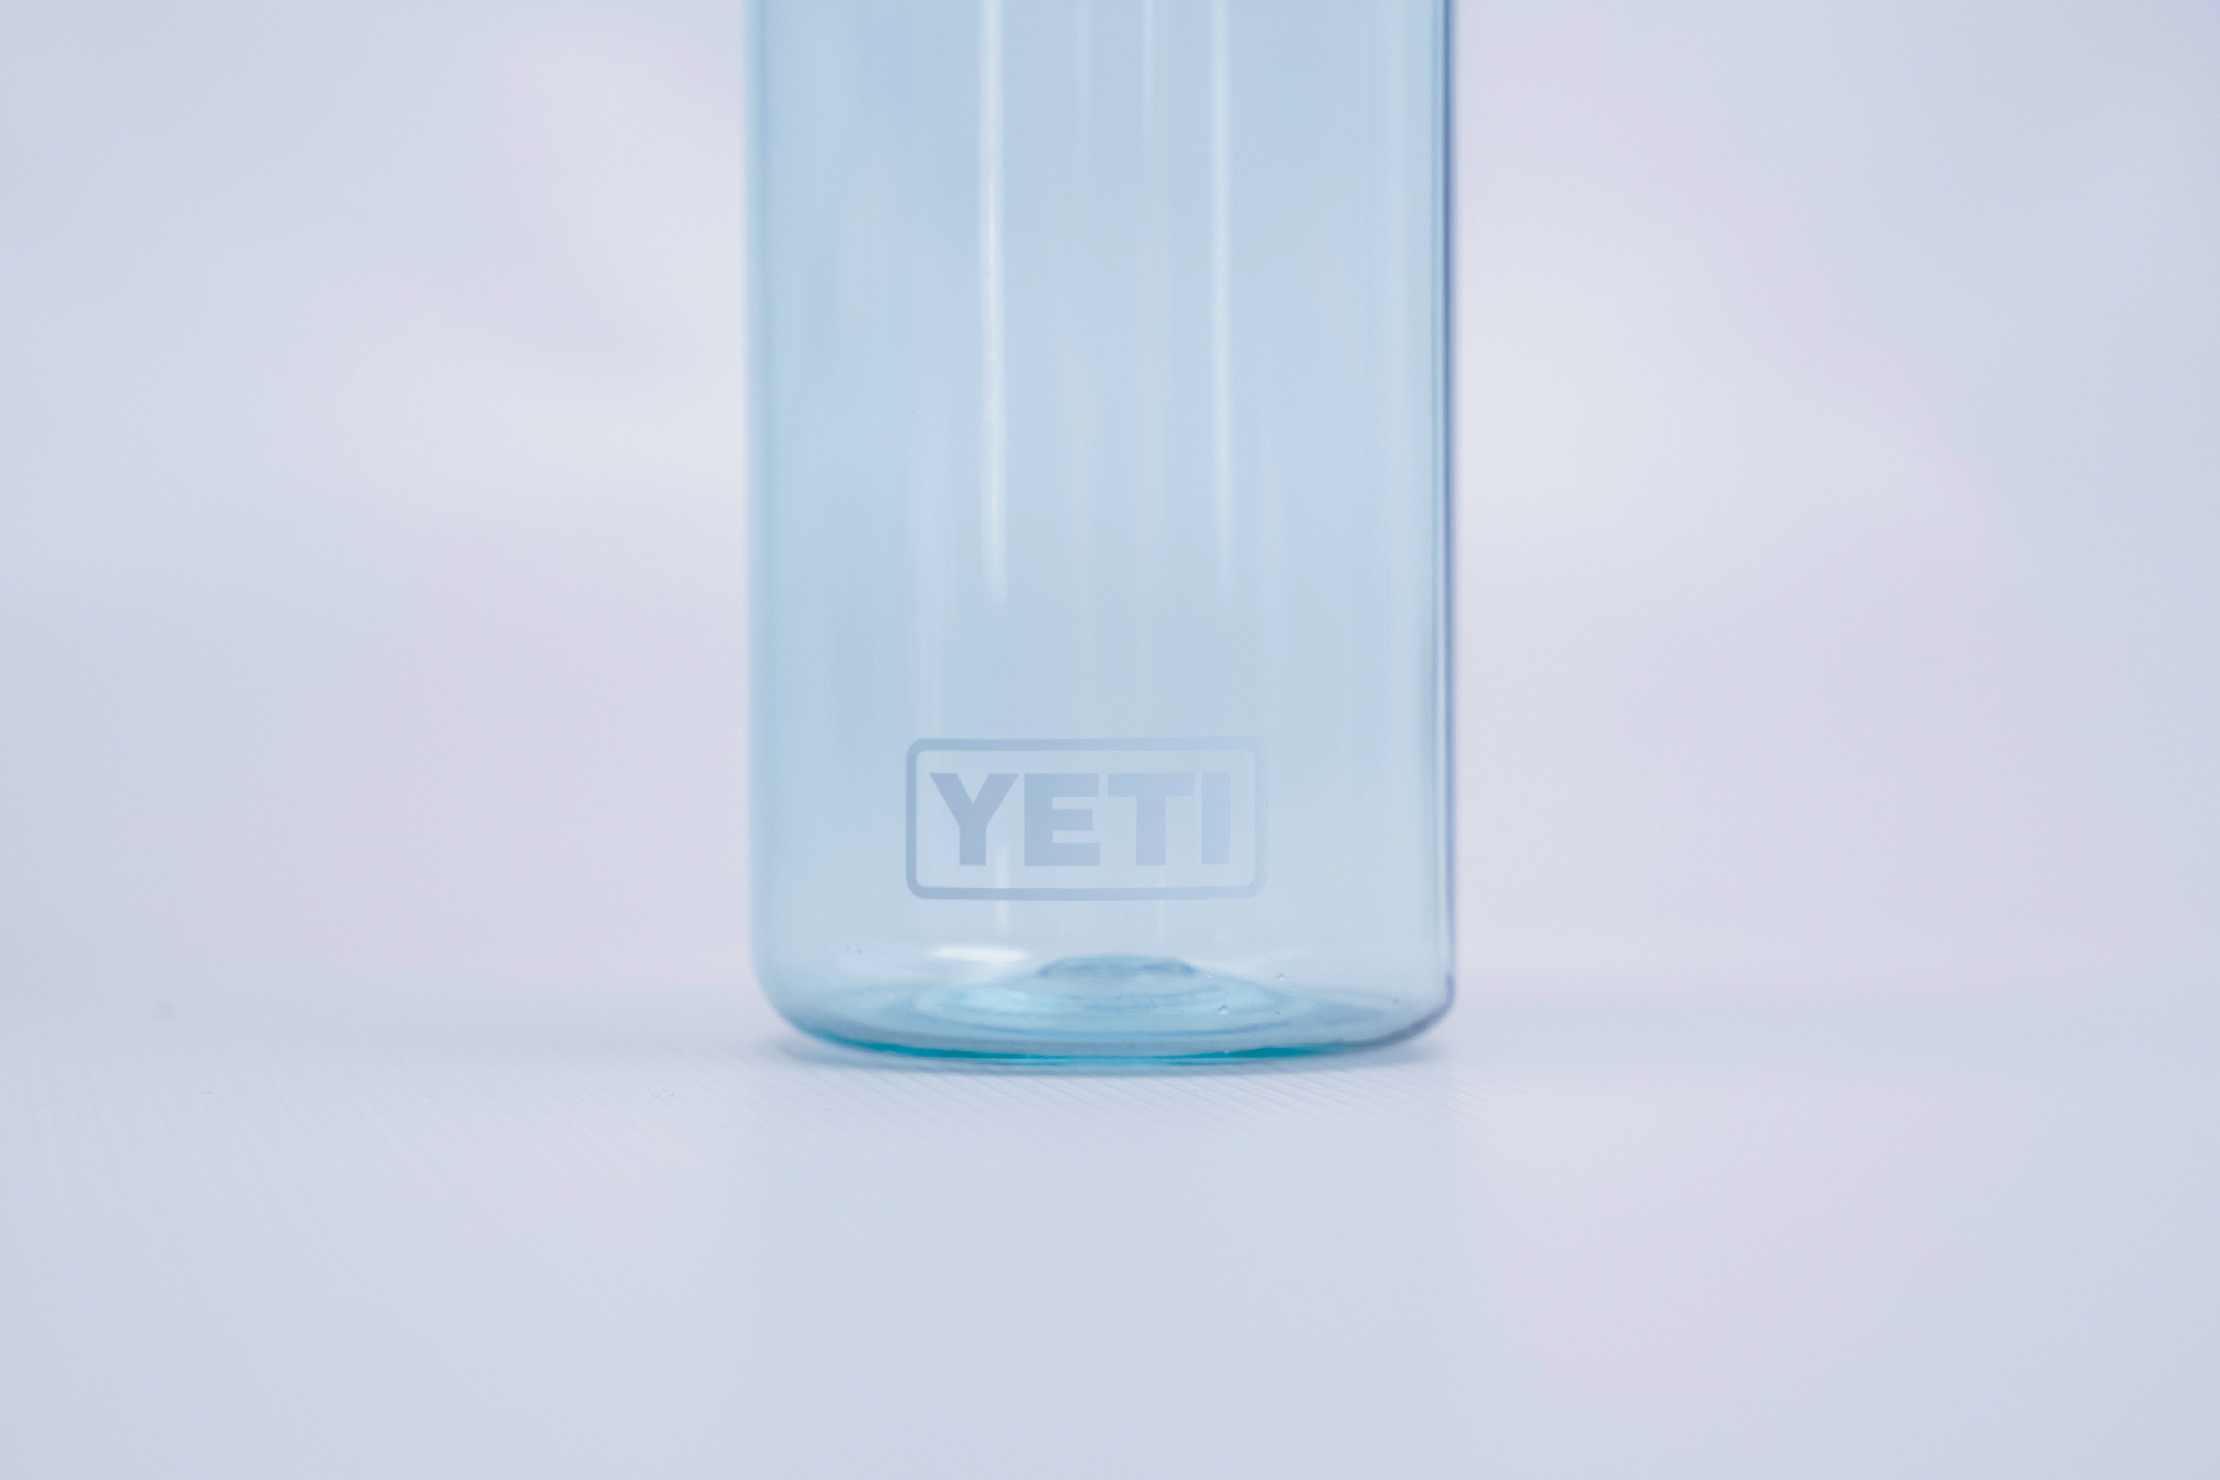 YETI Clear Yonder 34 oz Water Bottle